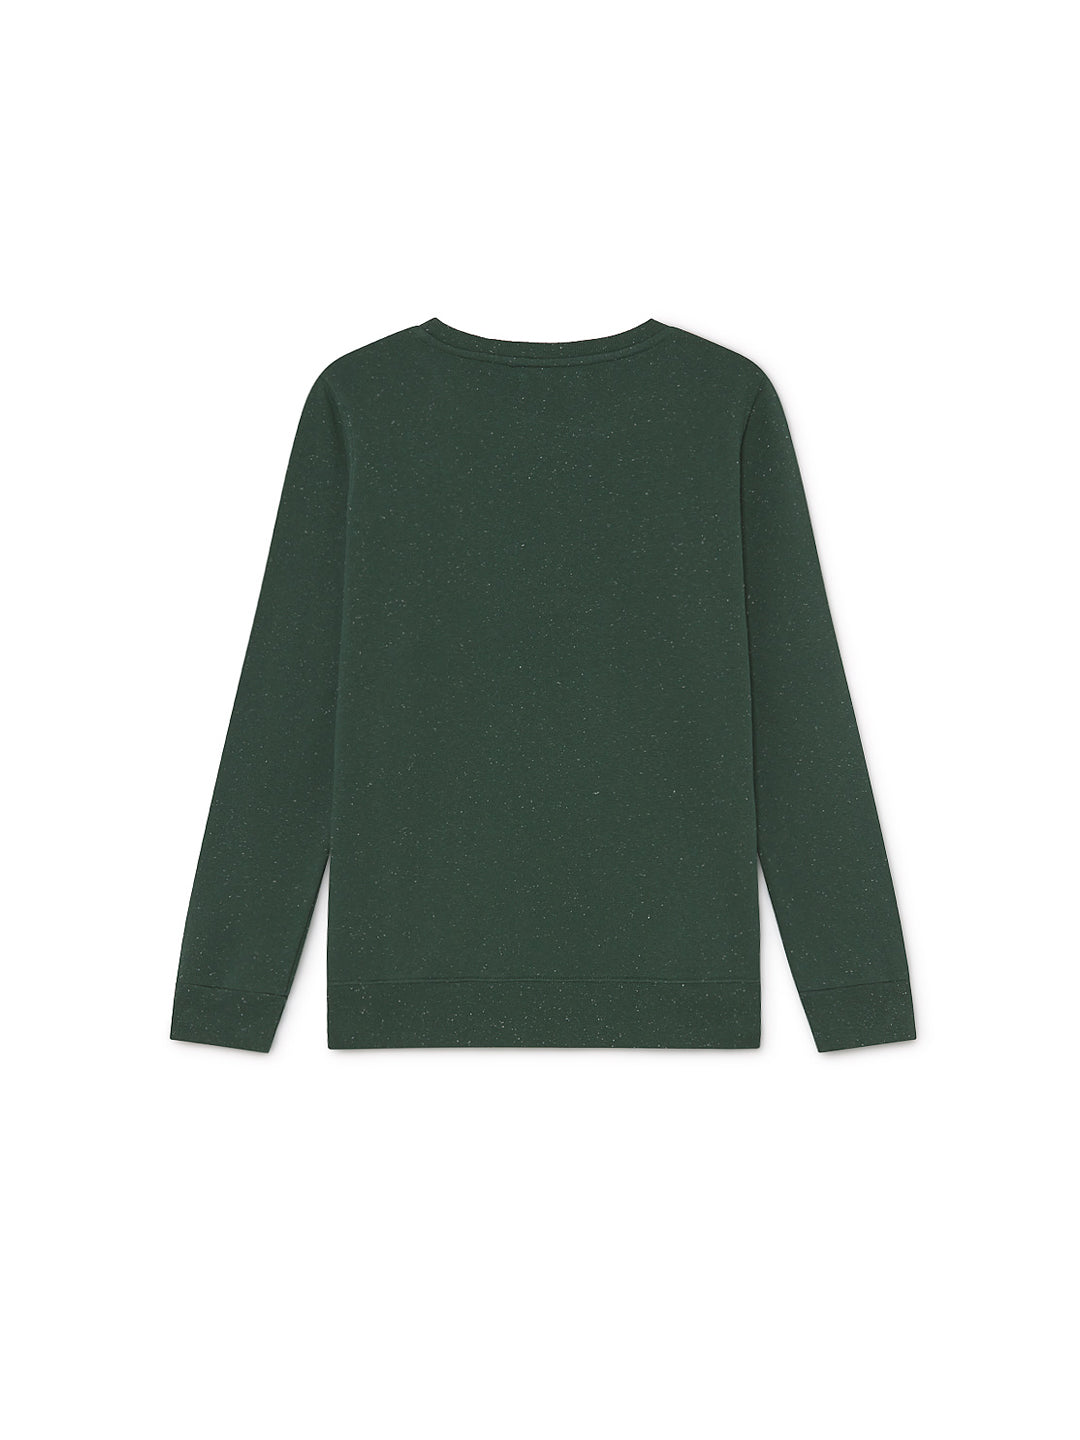 Sepanggar Sweatshirt - Dark Green